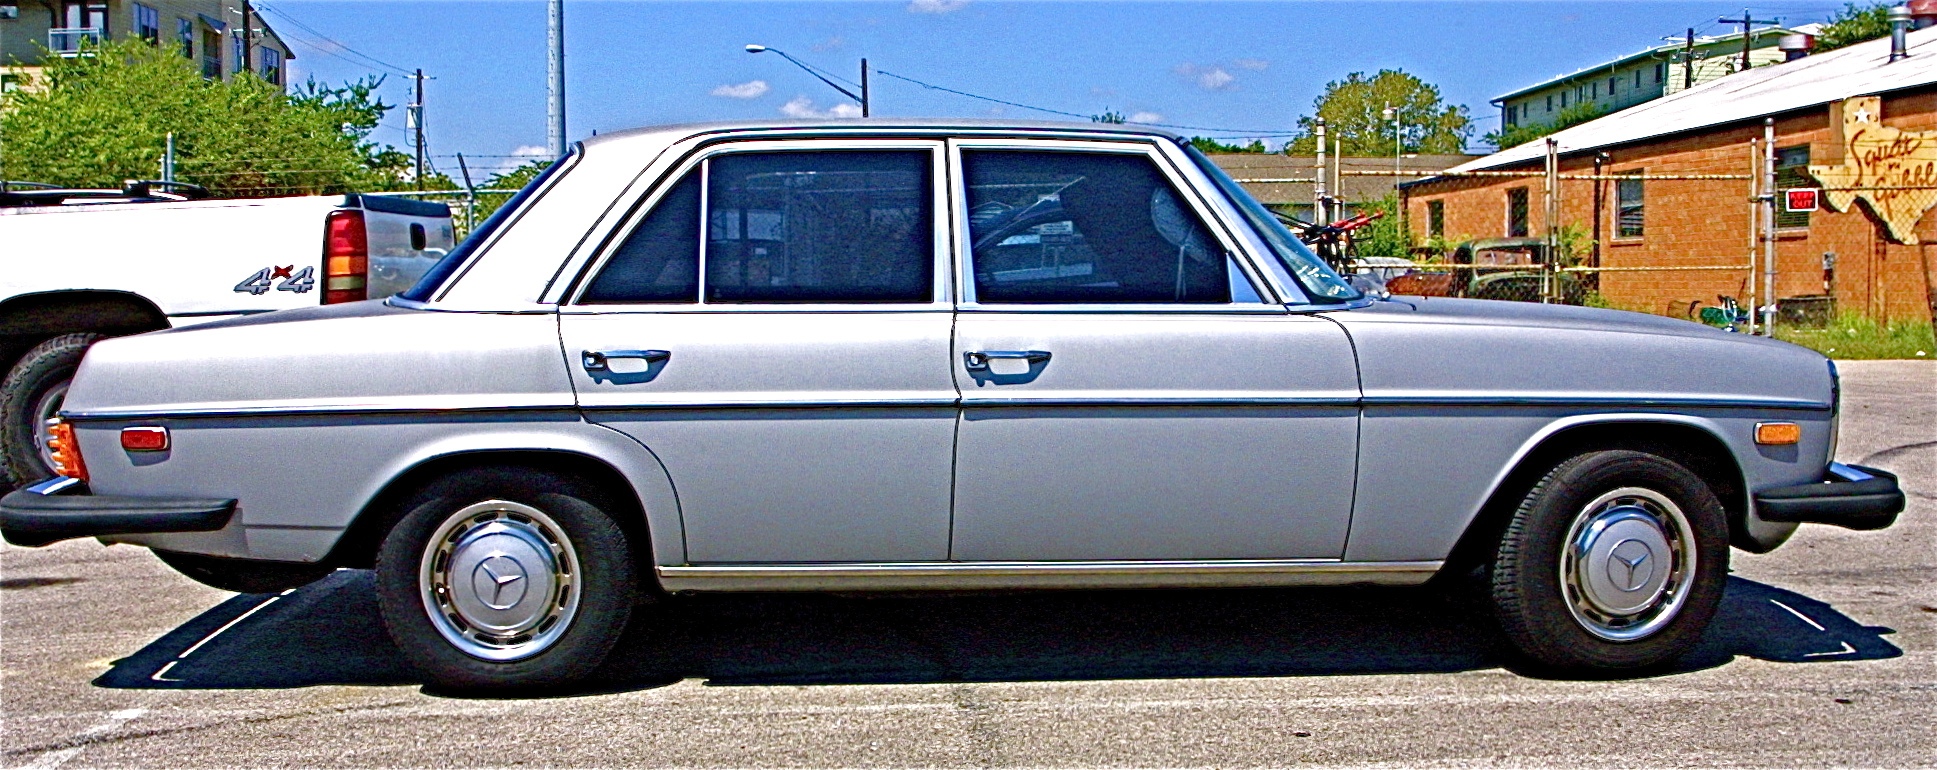 1970s Mercedes 300D at Austin Speed Shop  side